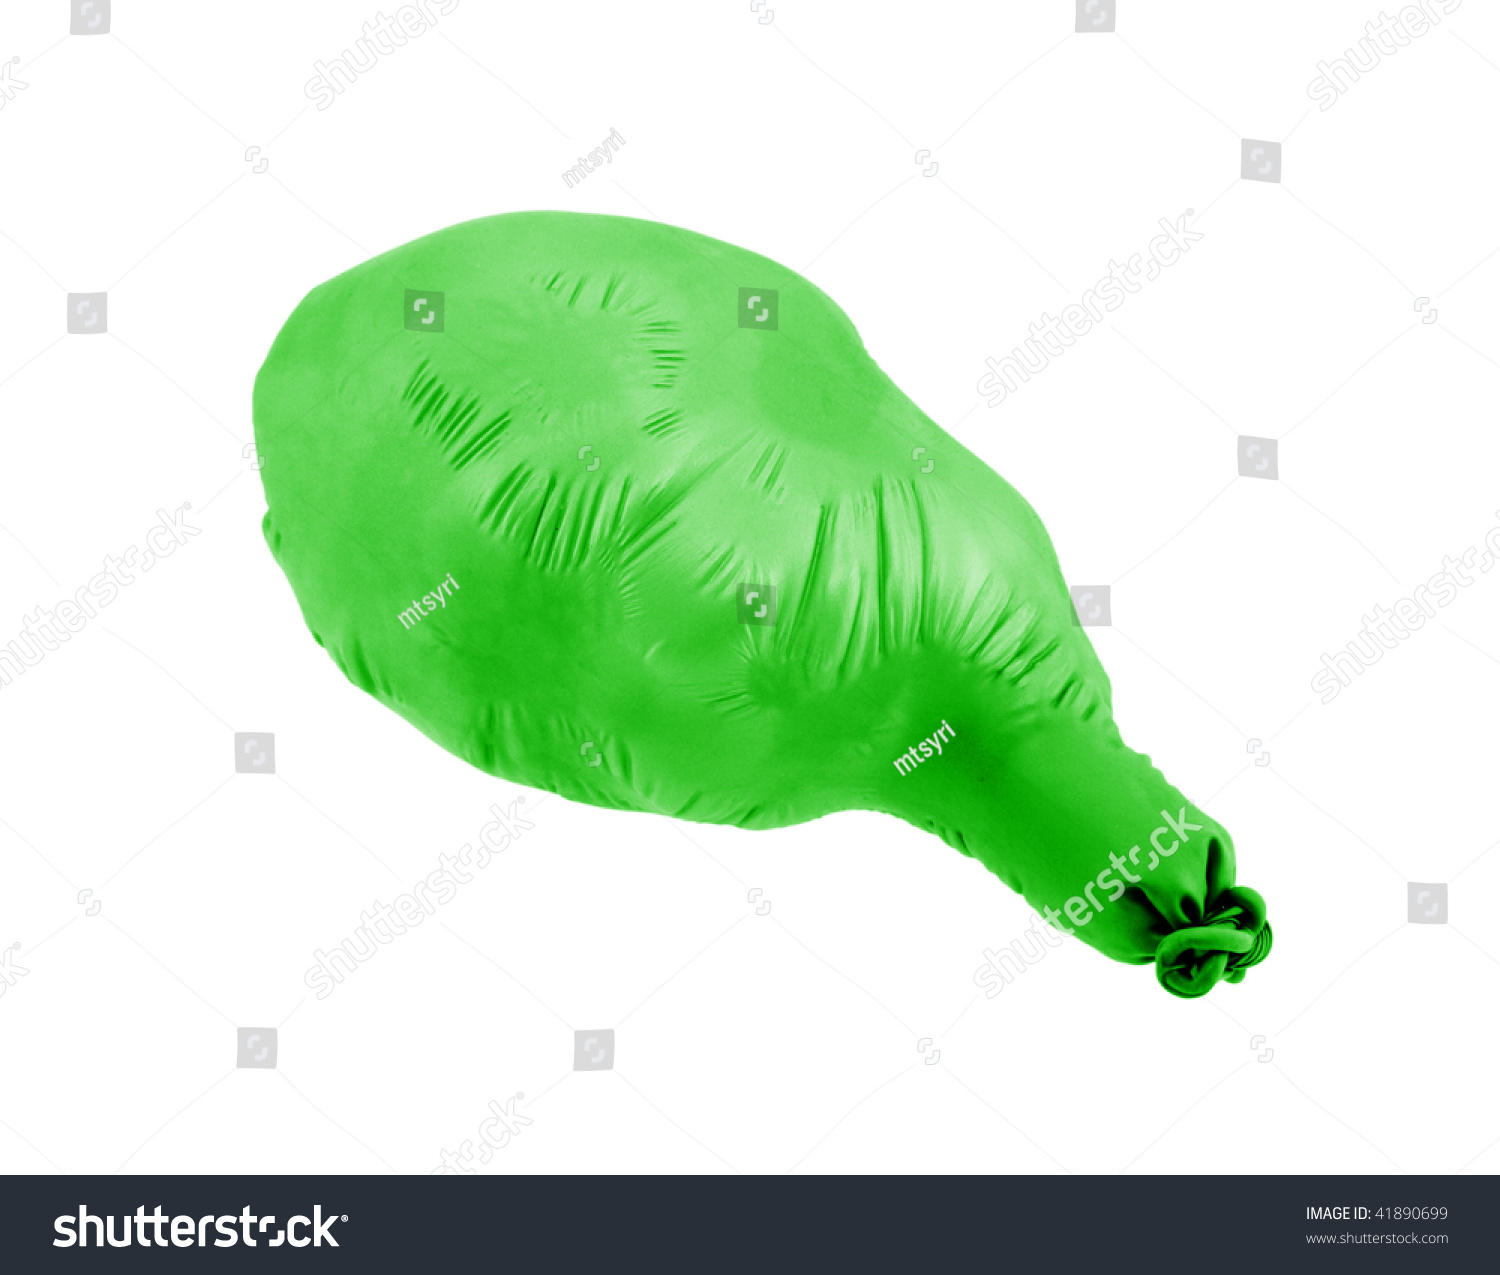 deflated balloon clip art - photo #40